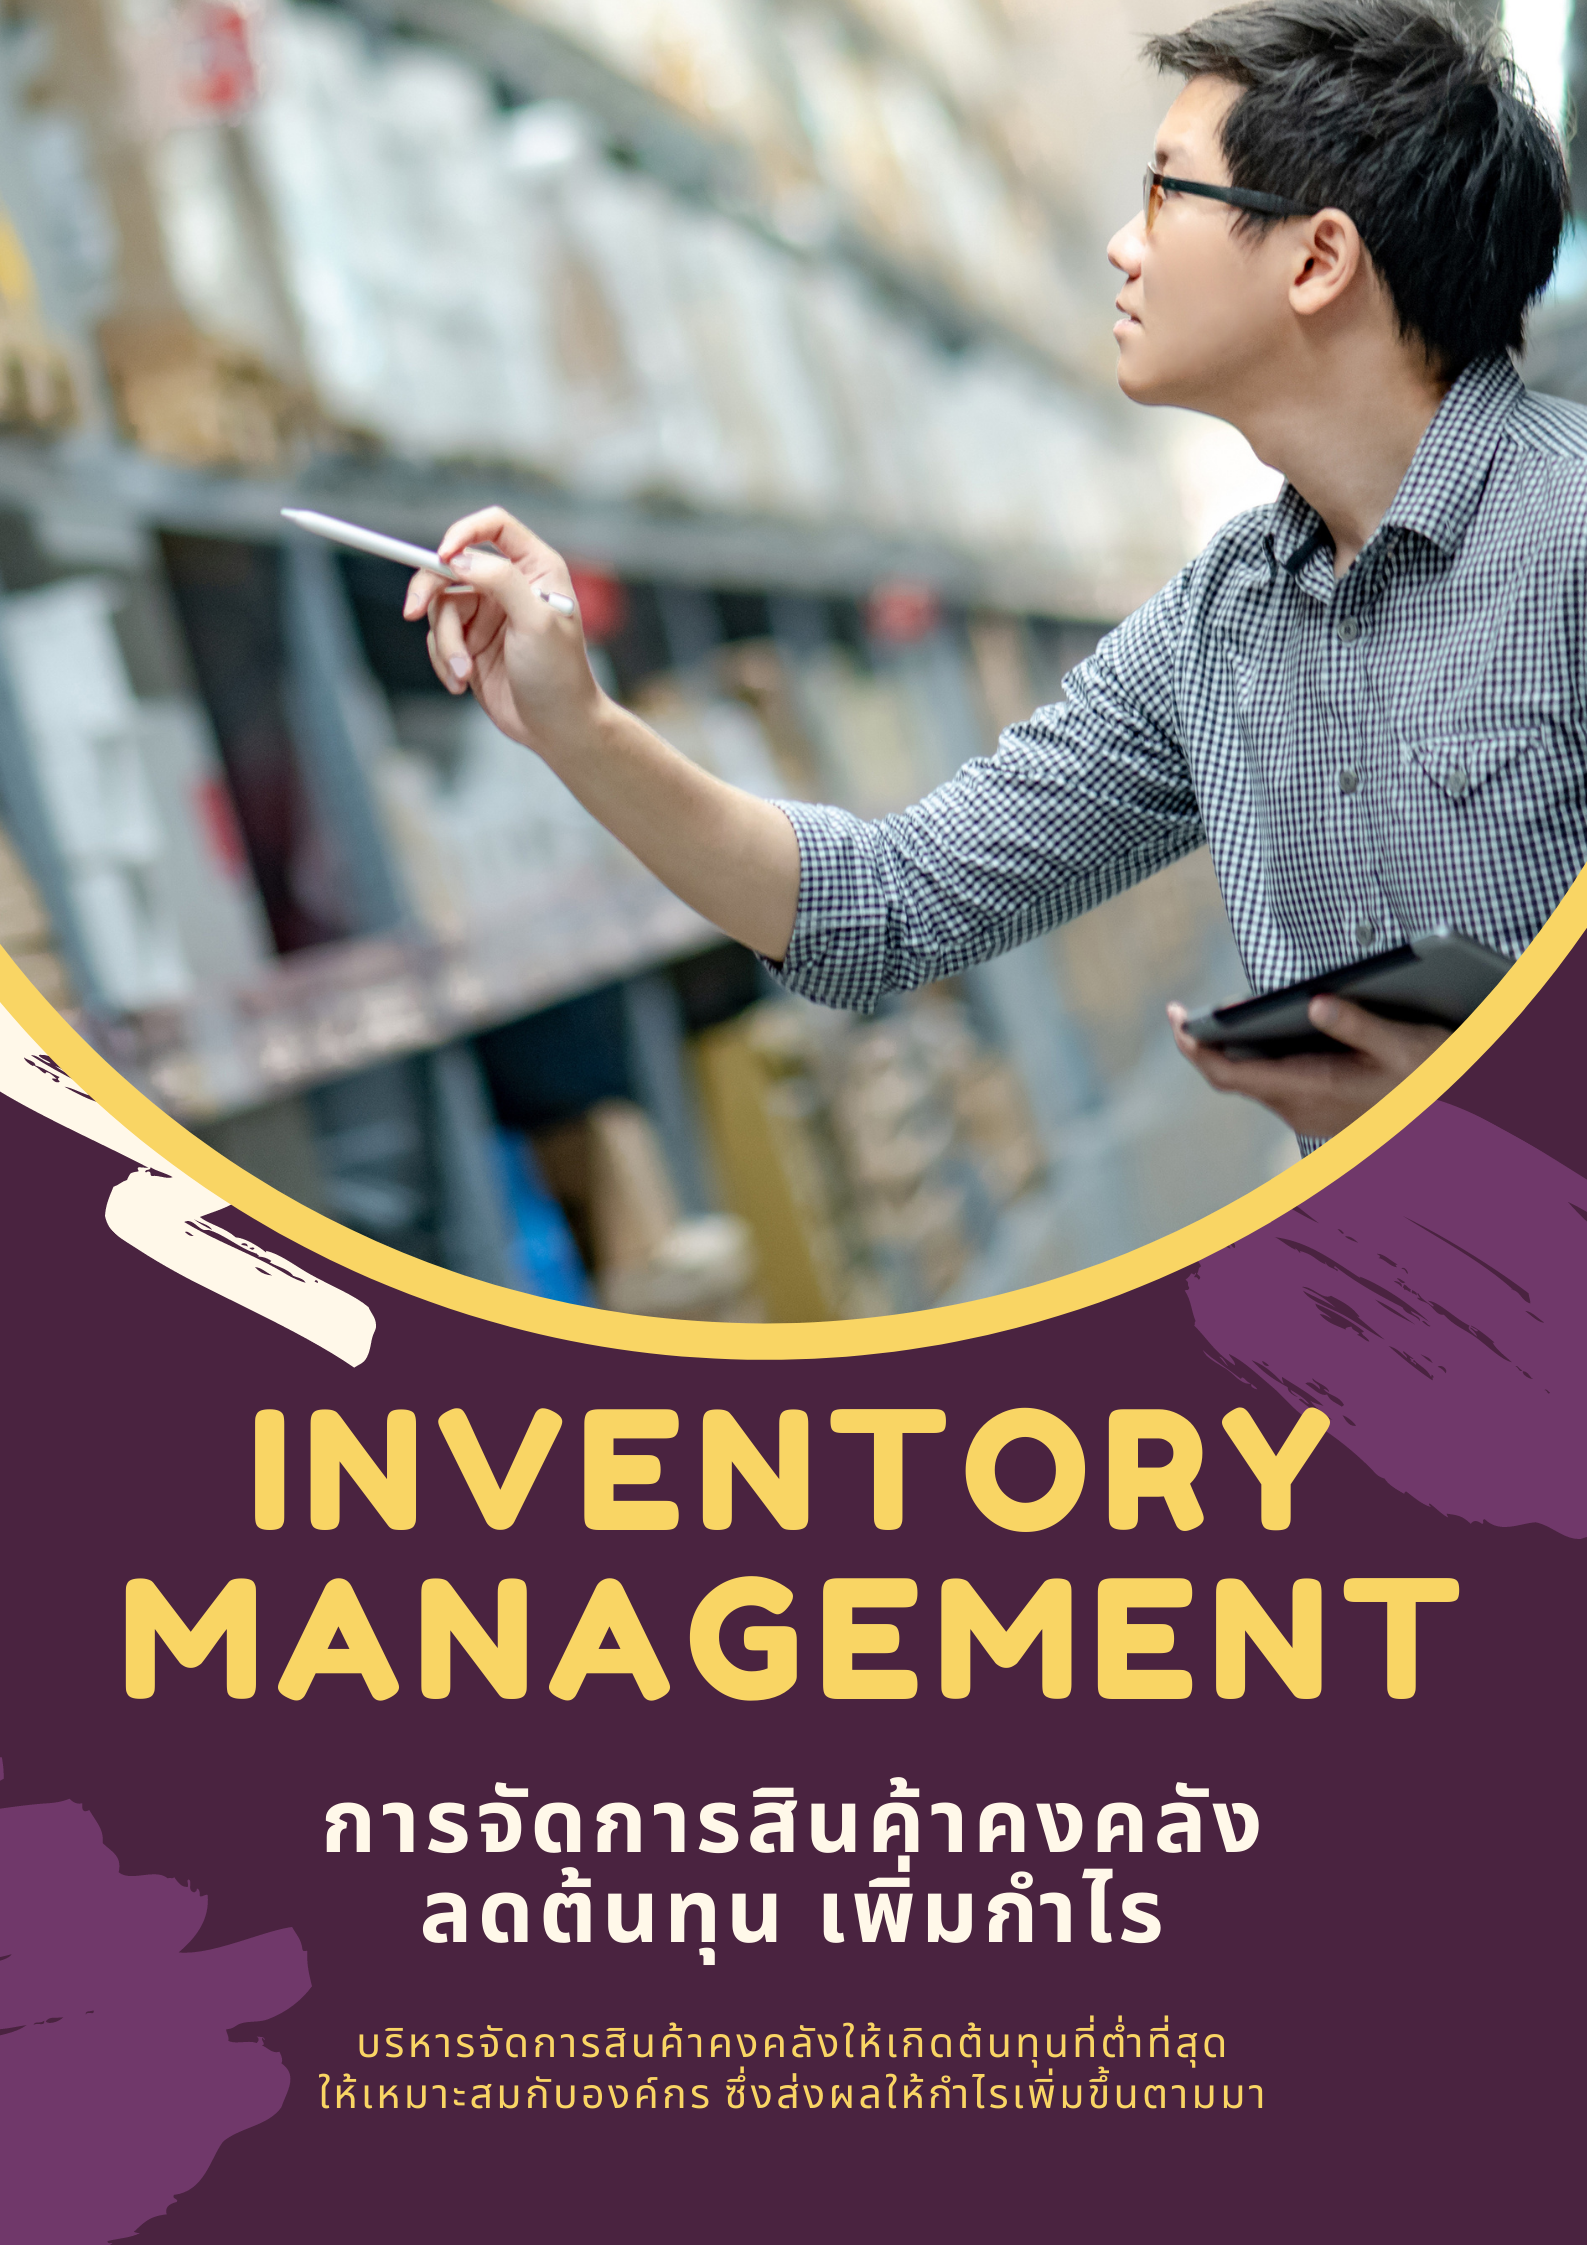 Online by Zoom หลักสูตร อบรมออนไลน์ : การจัดการสินค้าคงคลัง (Inventory Management) : ต้นทุนลด กำไรเพิ่ม (หลักสูตร 6 ชัวโมง)